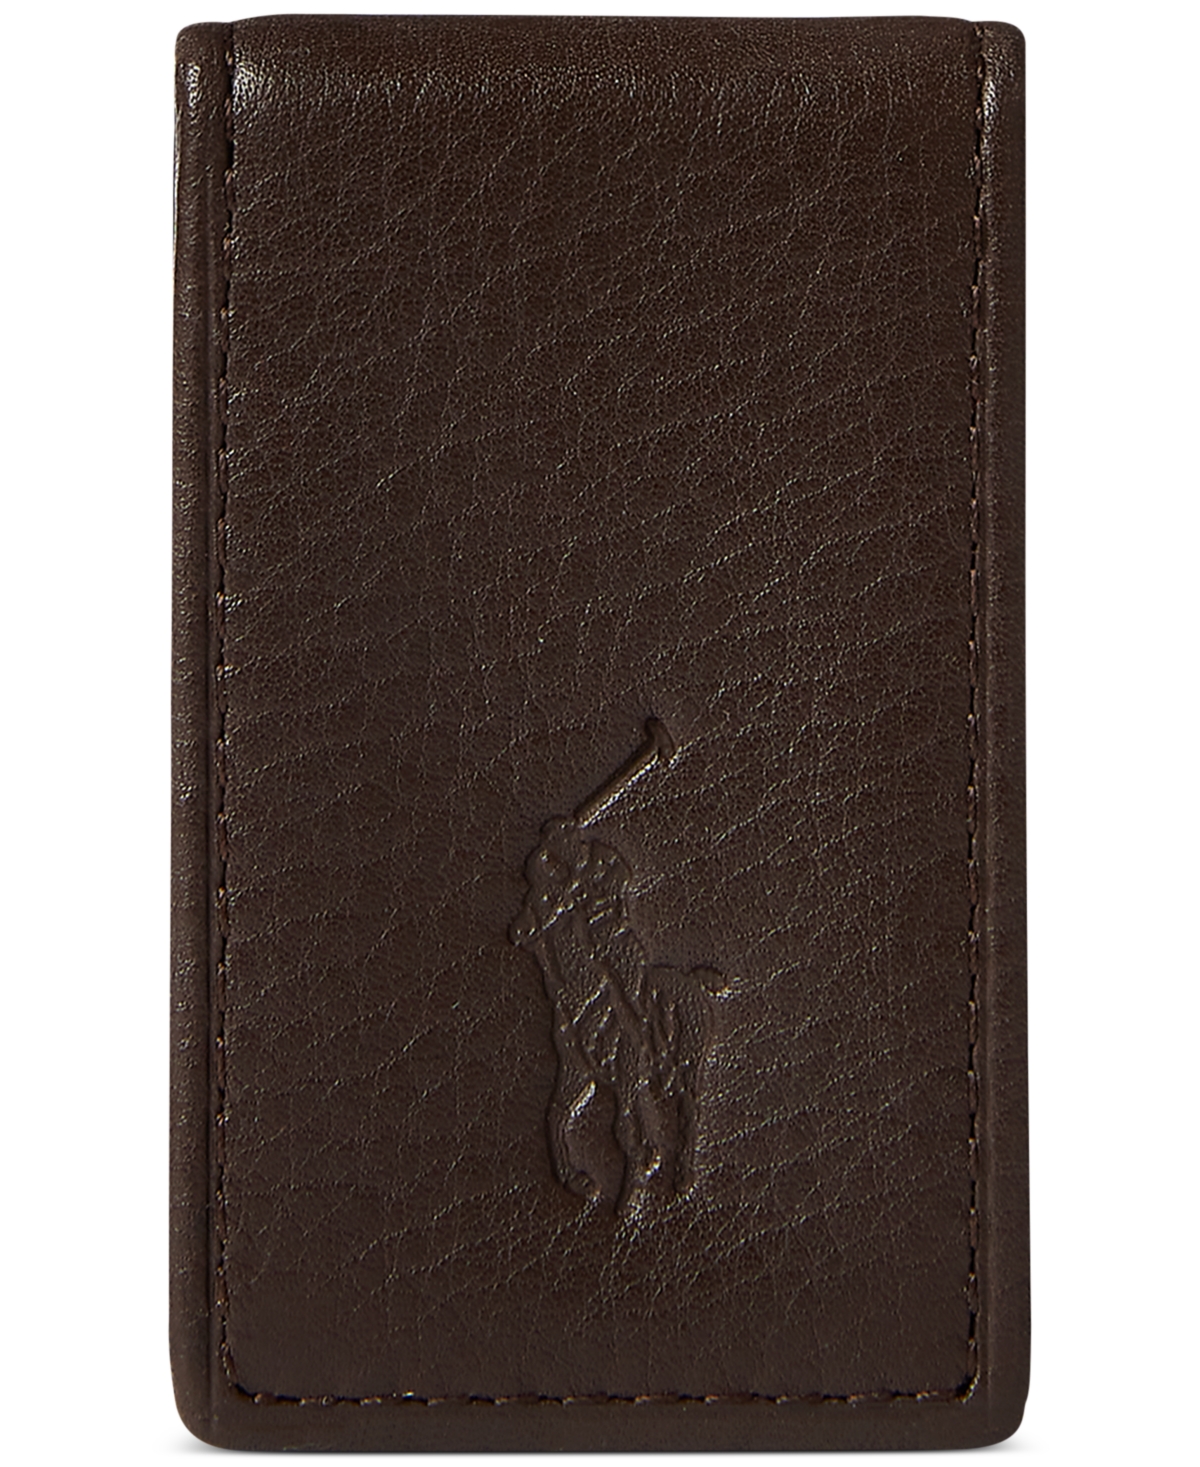 Men's Pebbled Leather Money Clip - Brown